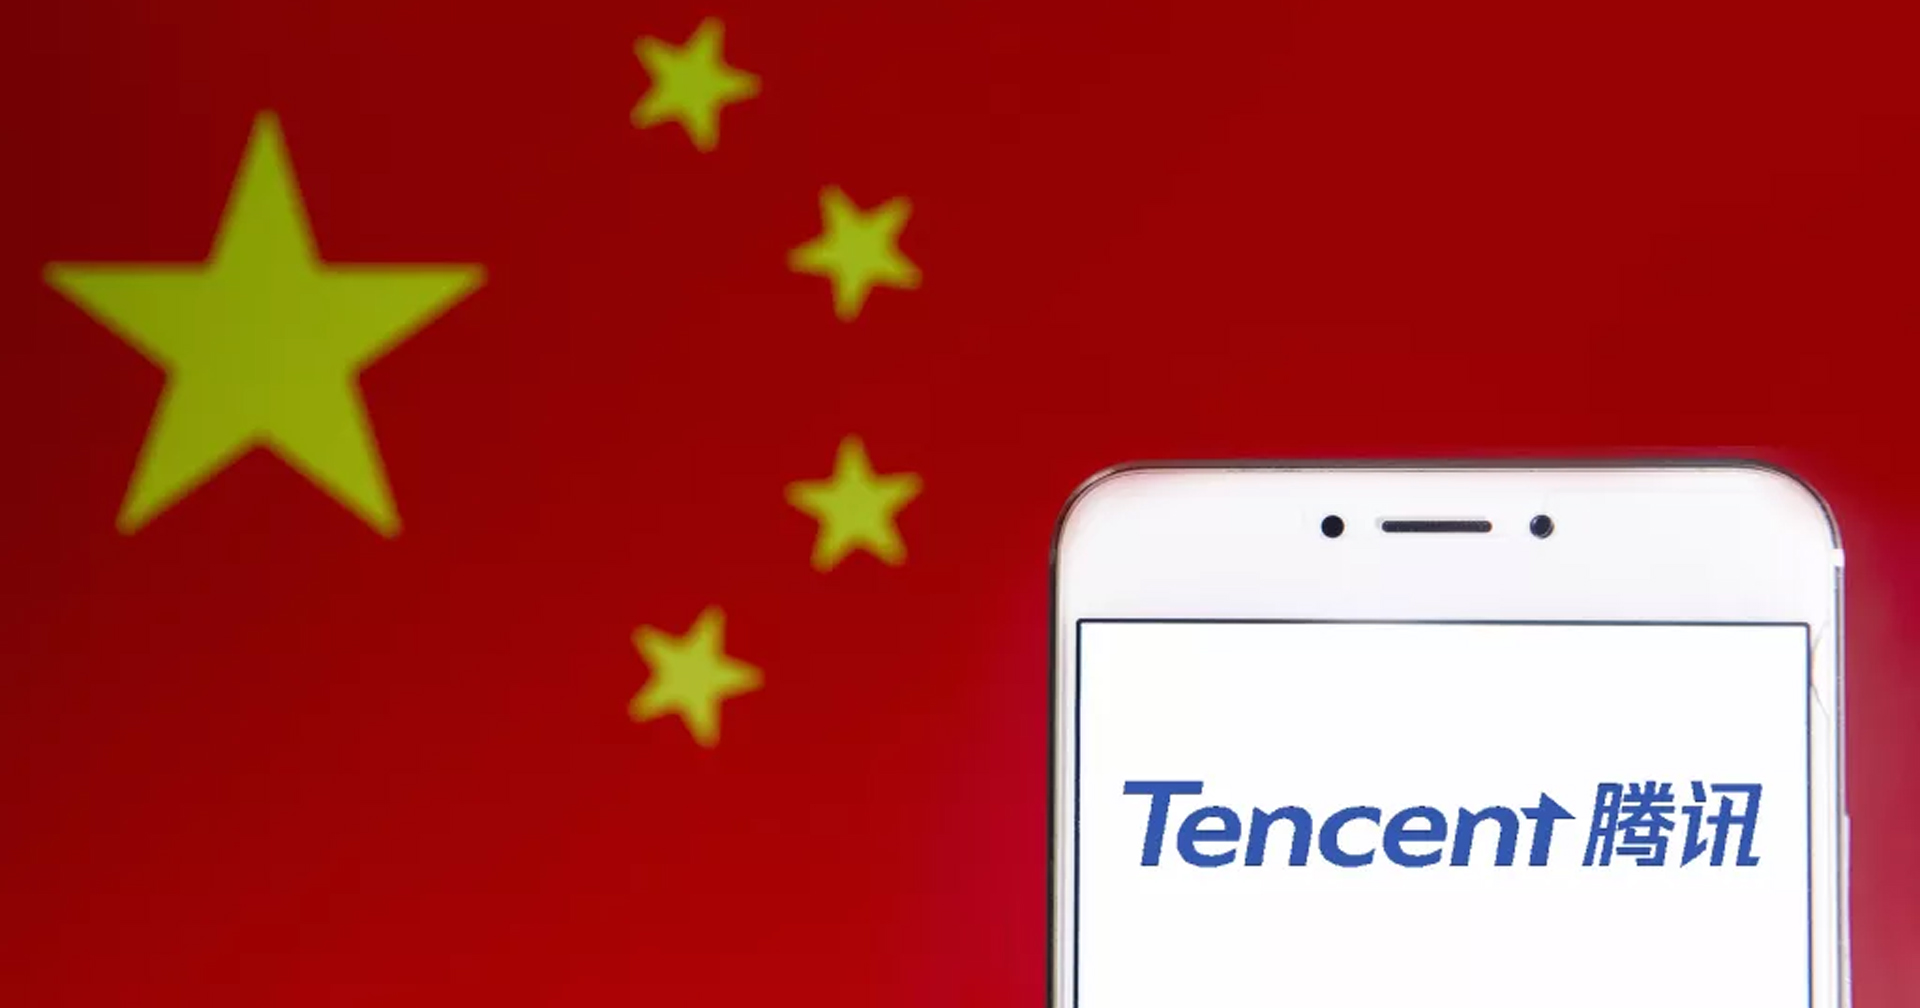 Tencent เริ่มใช้เทคโนโลยีตรวจจับใบหน้าเพื่อจำกัดเวลาเล่นเกมของเด็กในประเทศจีน